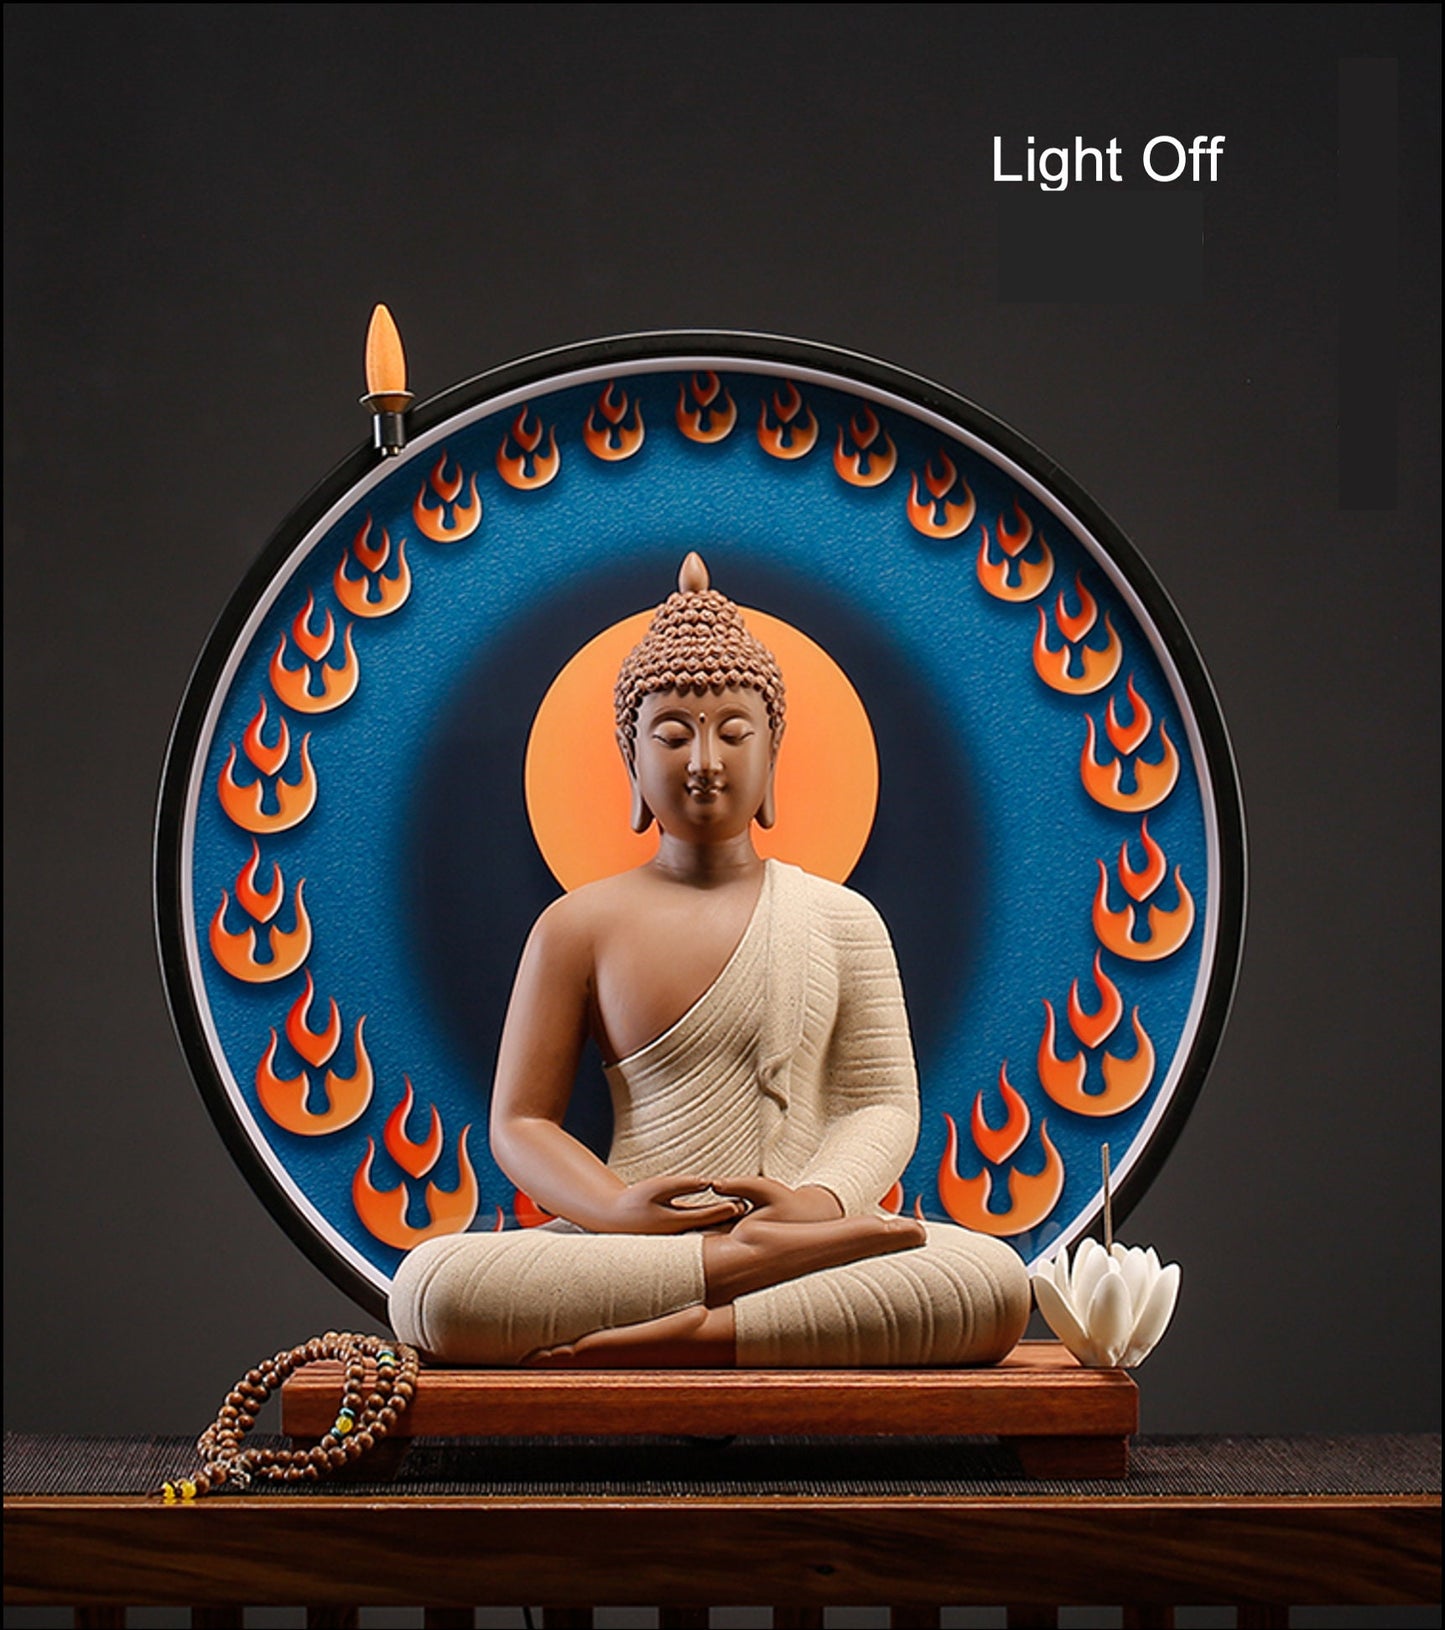 Gautama Buddha Statue Decorative Set with LED light background | Buddha Statue | Shakyamuni Buddha | Meditation | Home Decoration